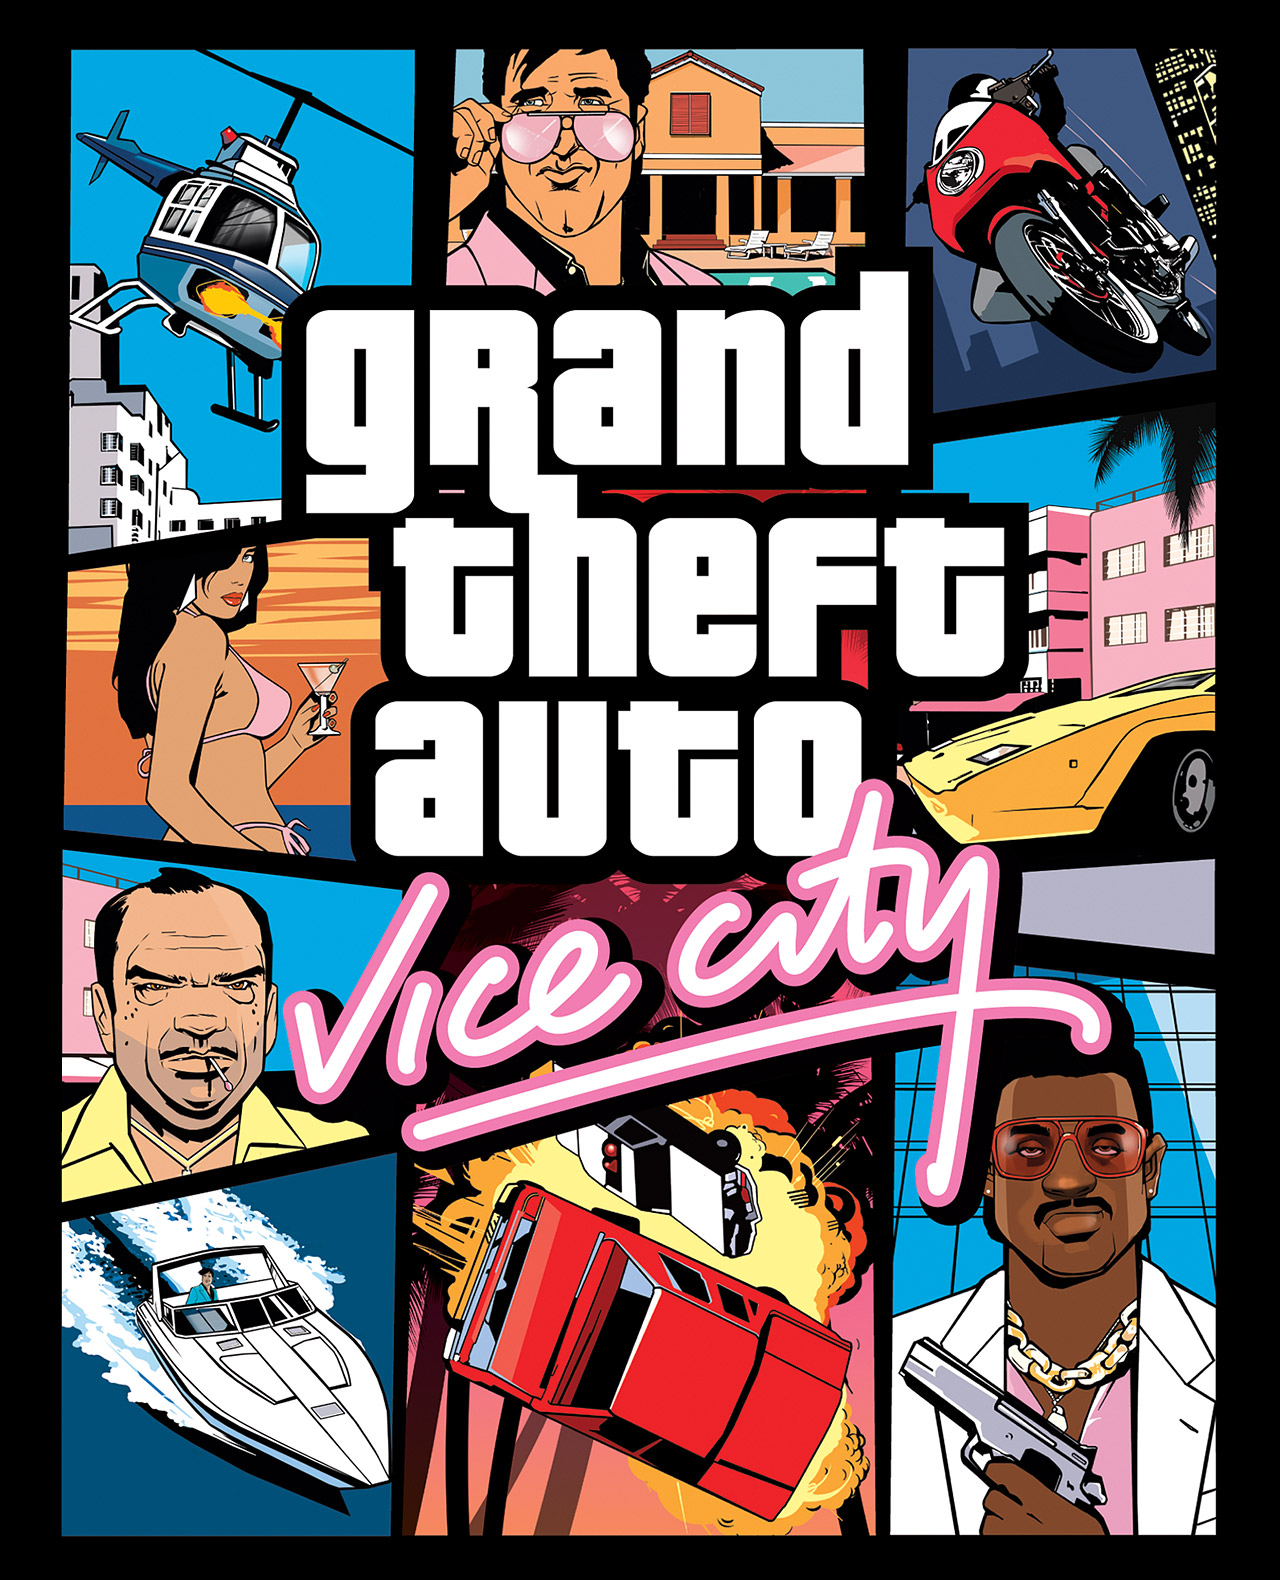 Resultado de imagen para vice city cover art